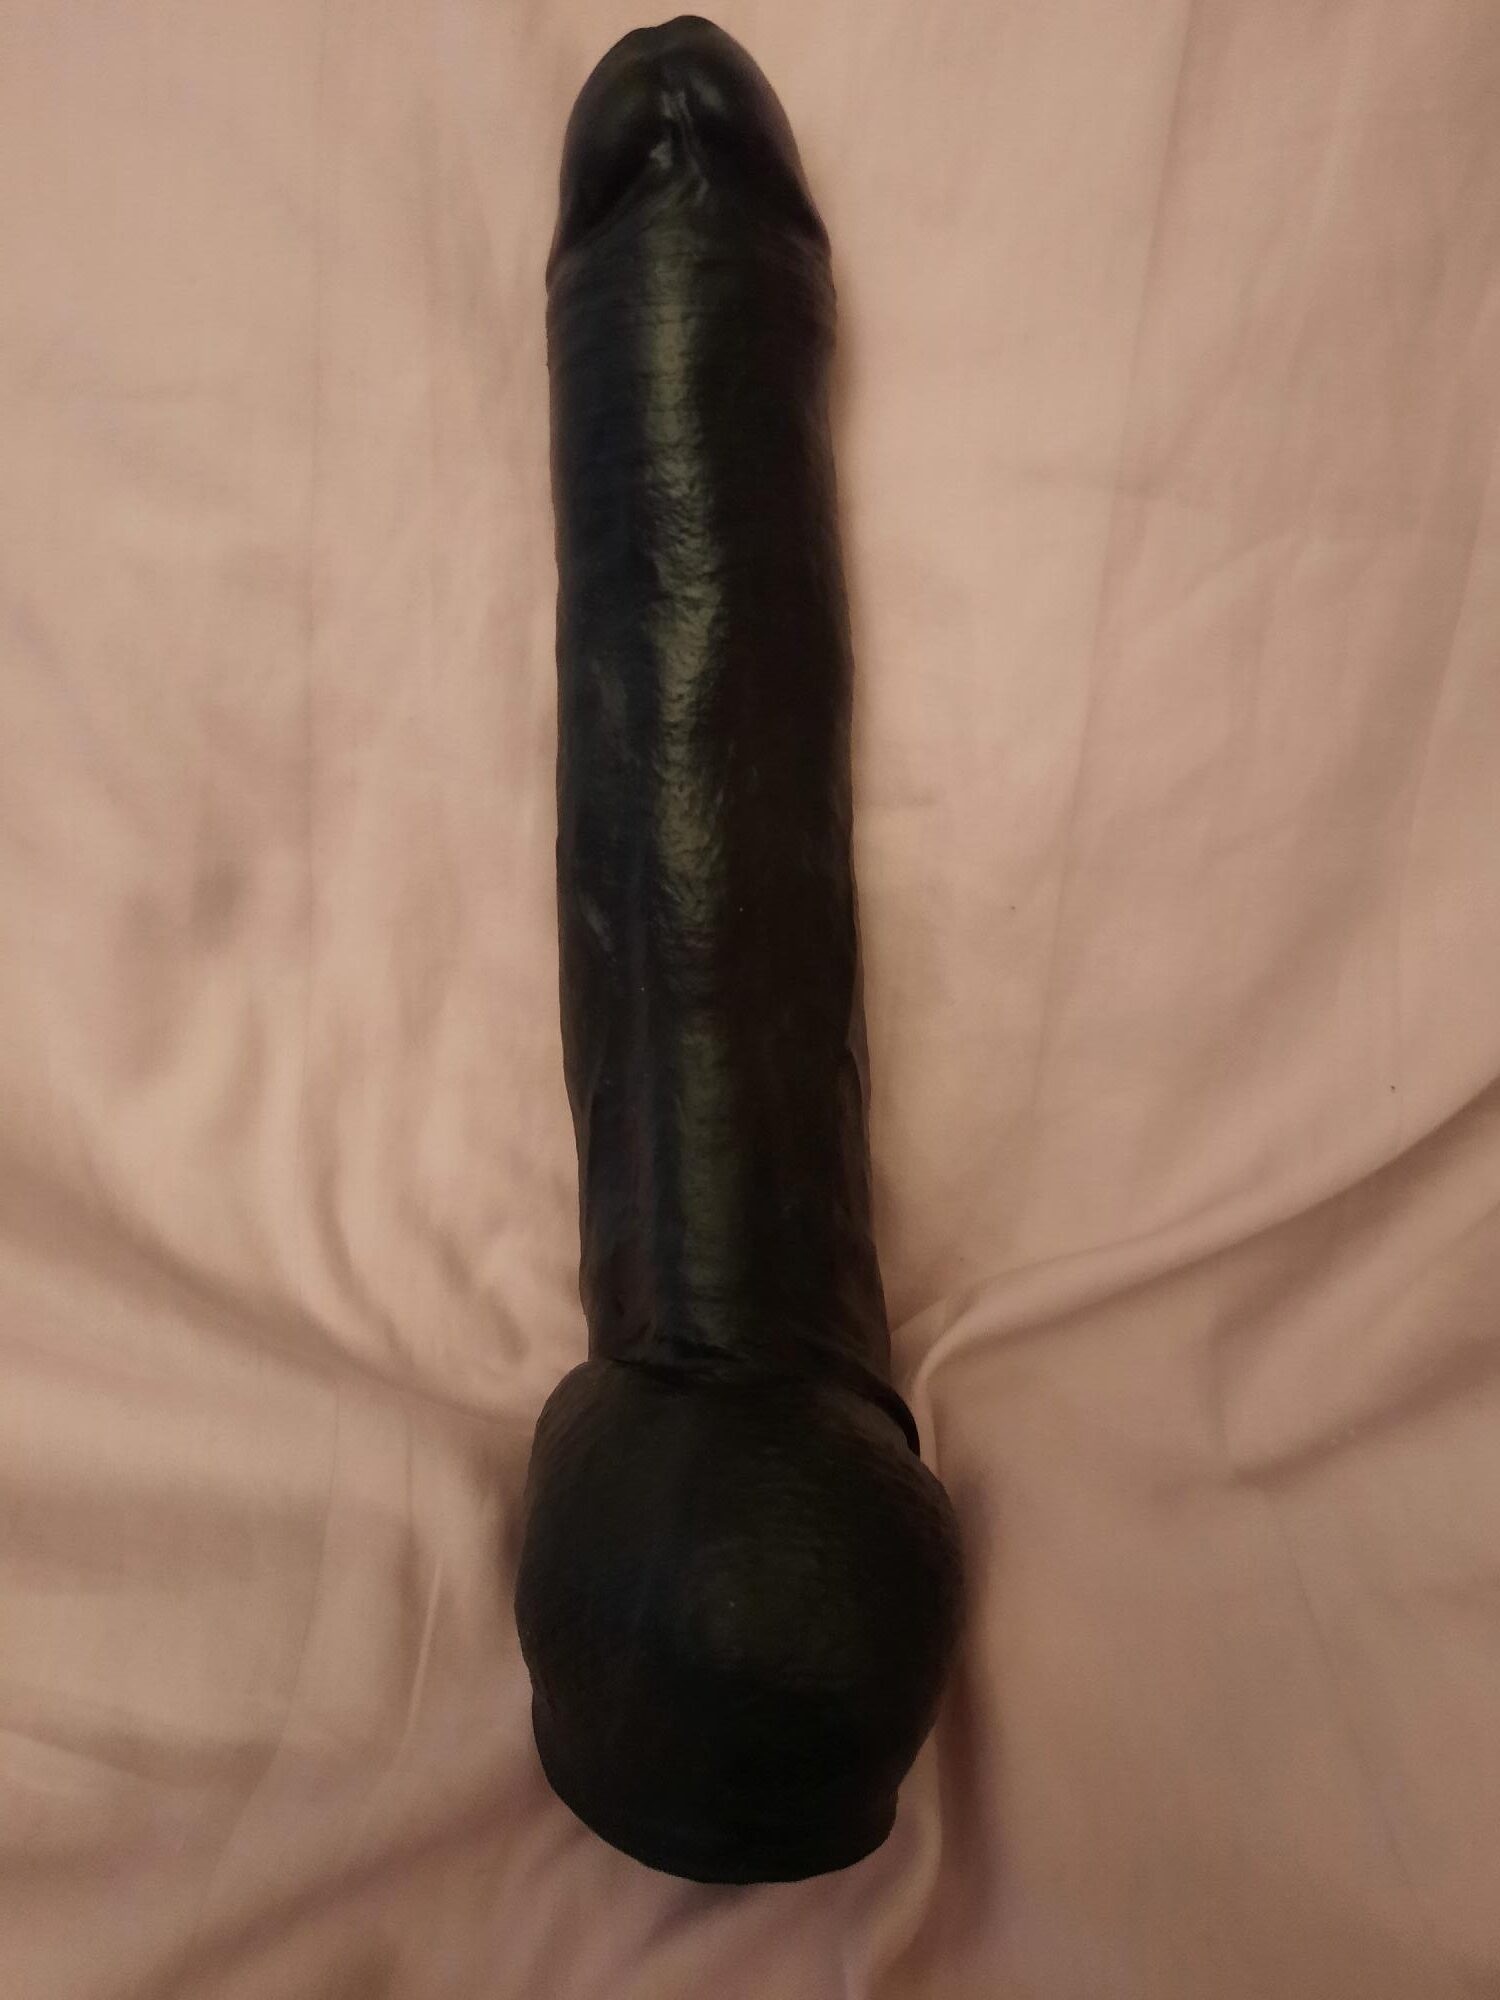 All black sven 29 cm